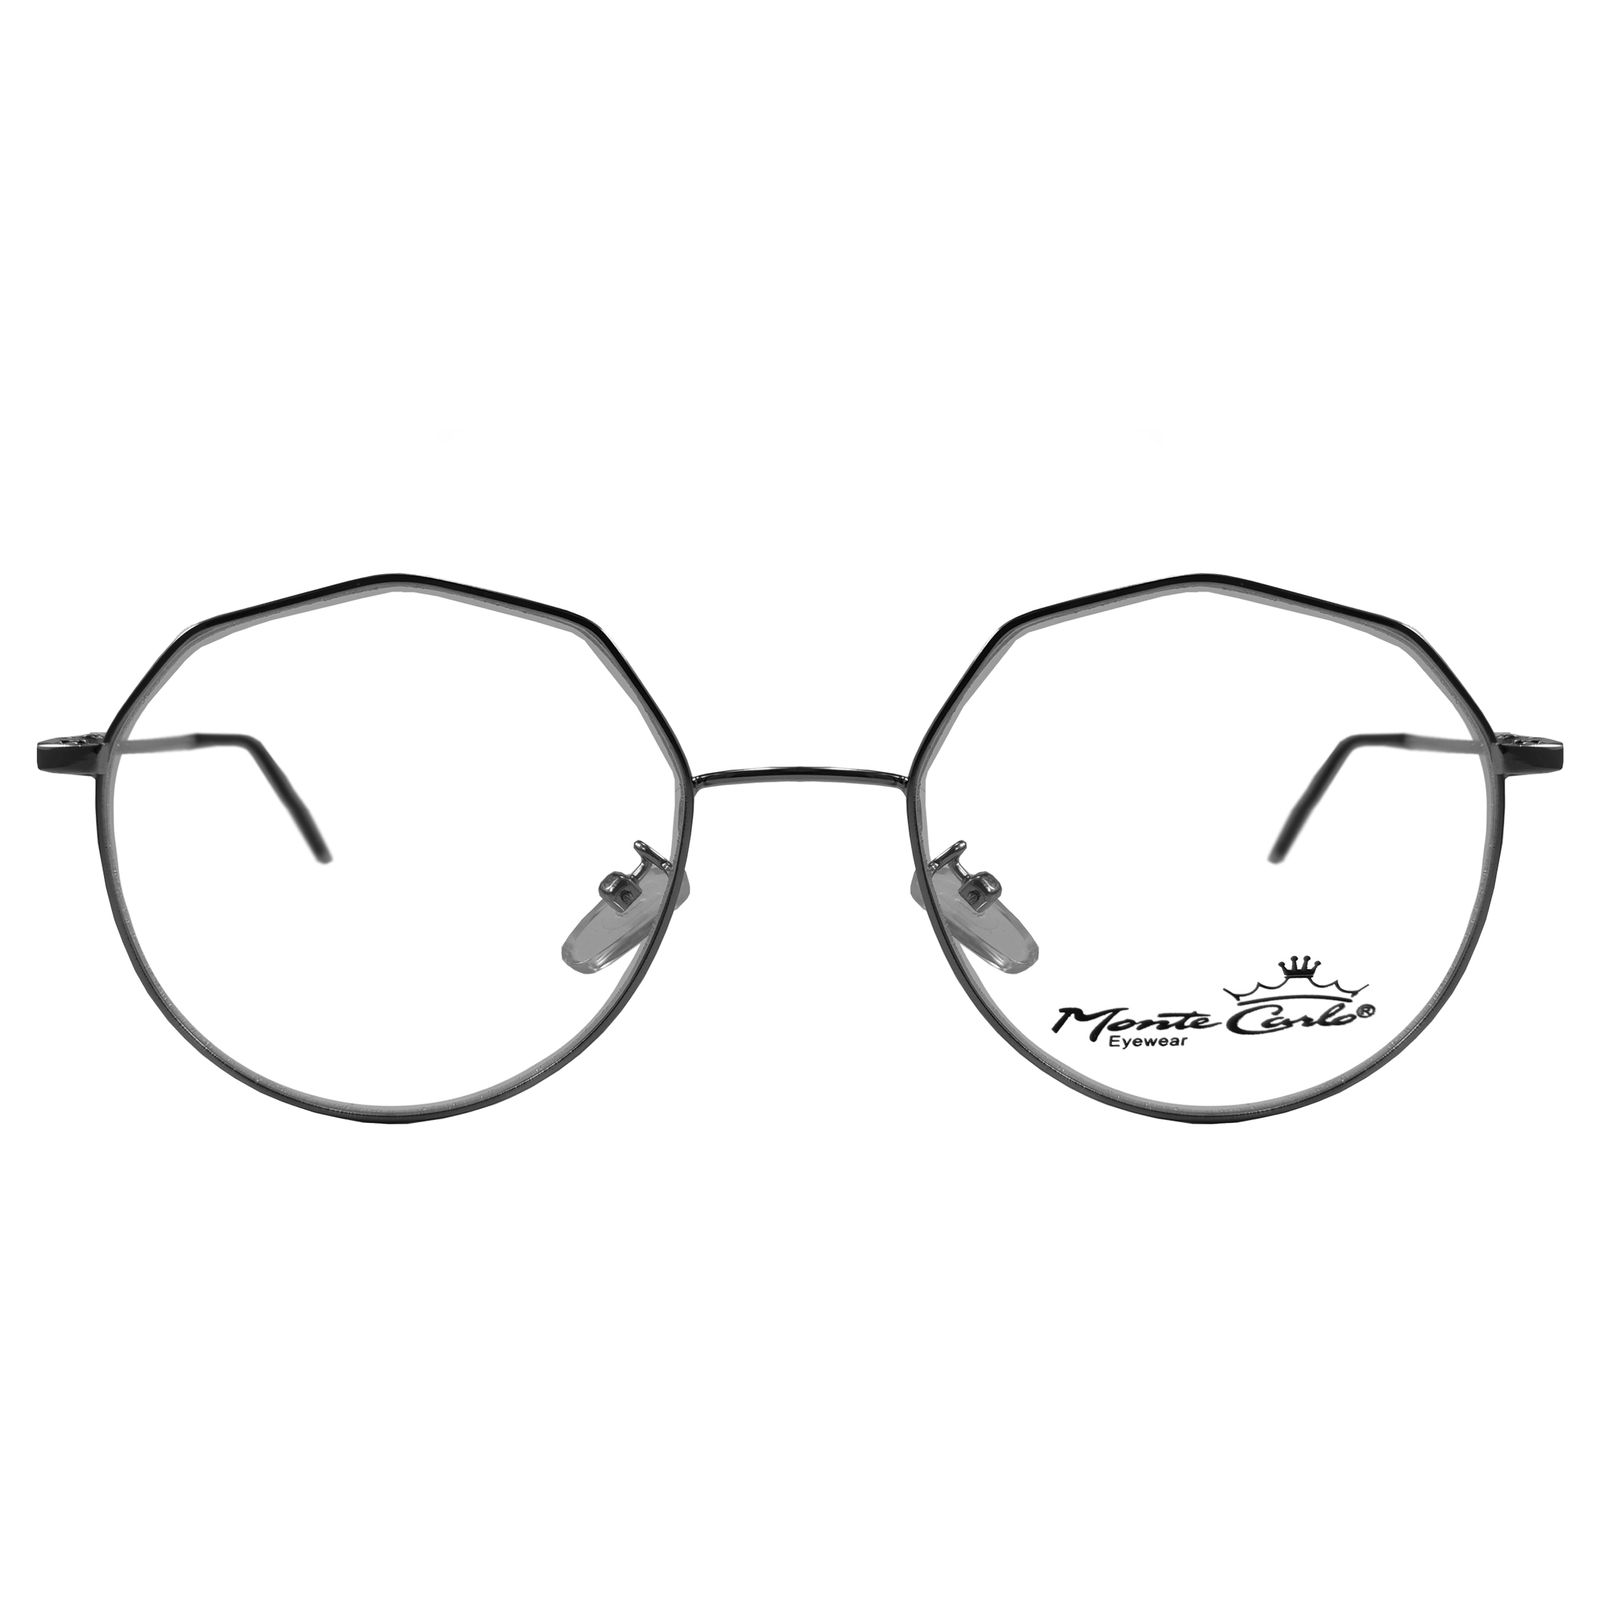 فریم عینک طبی مونته کارلو مدل 66013 کد 113 -  - 1